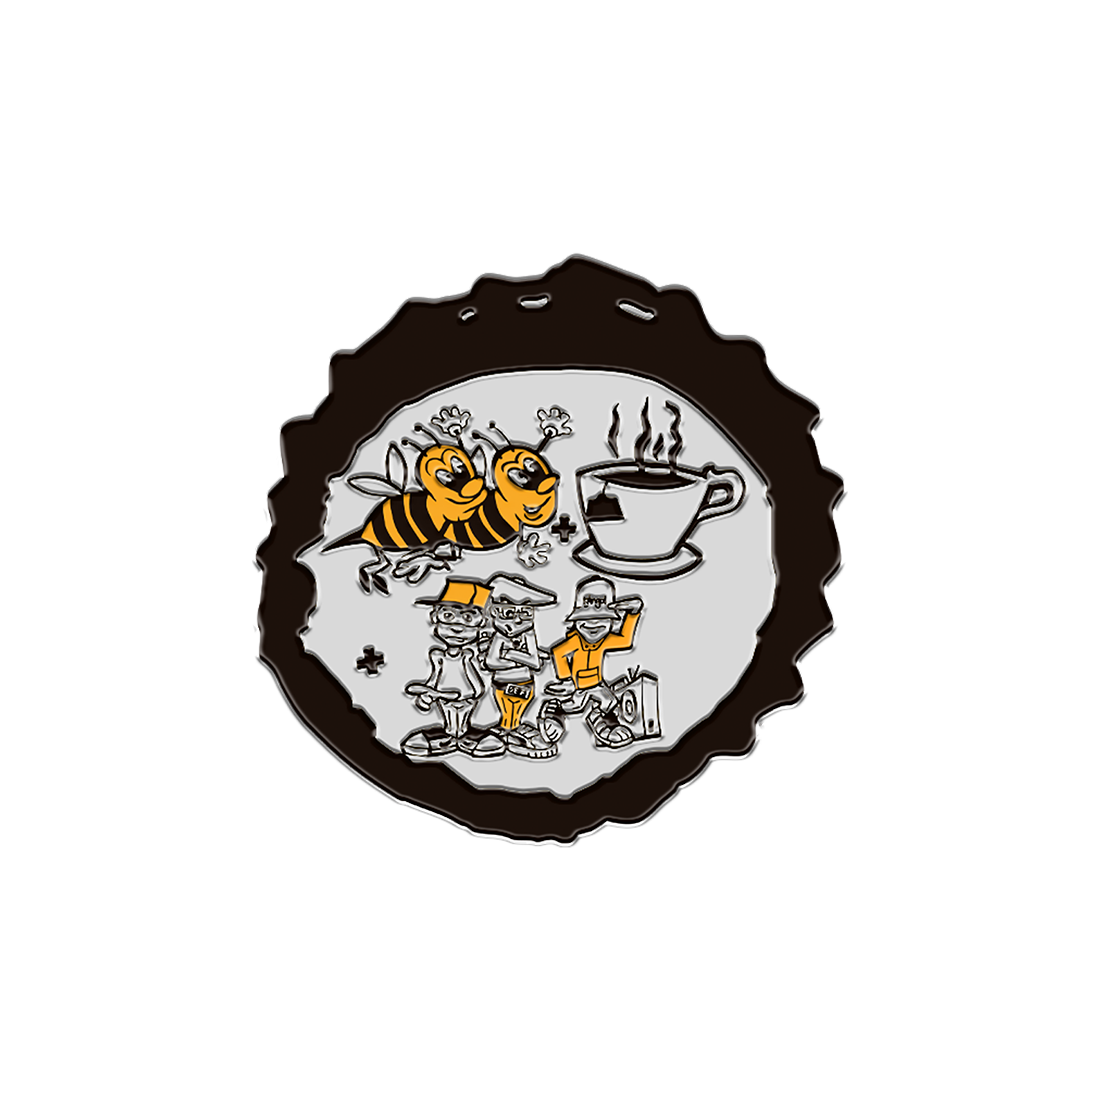 Beastie Boys - Beastie Boys Bees Tea Boys Pin